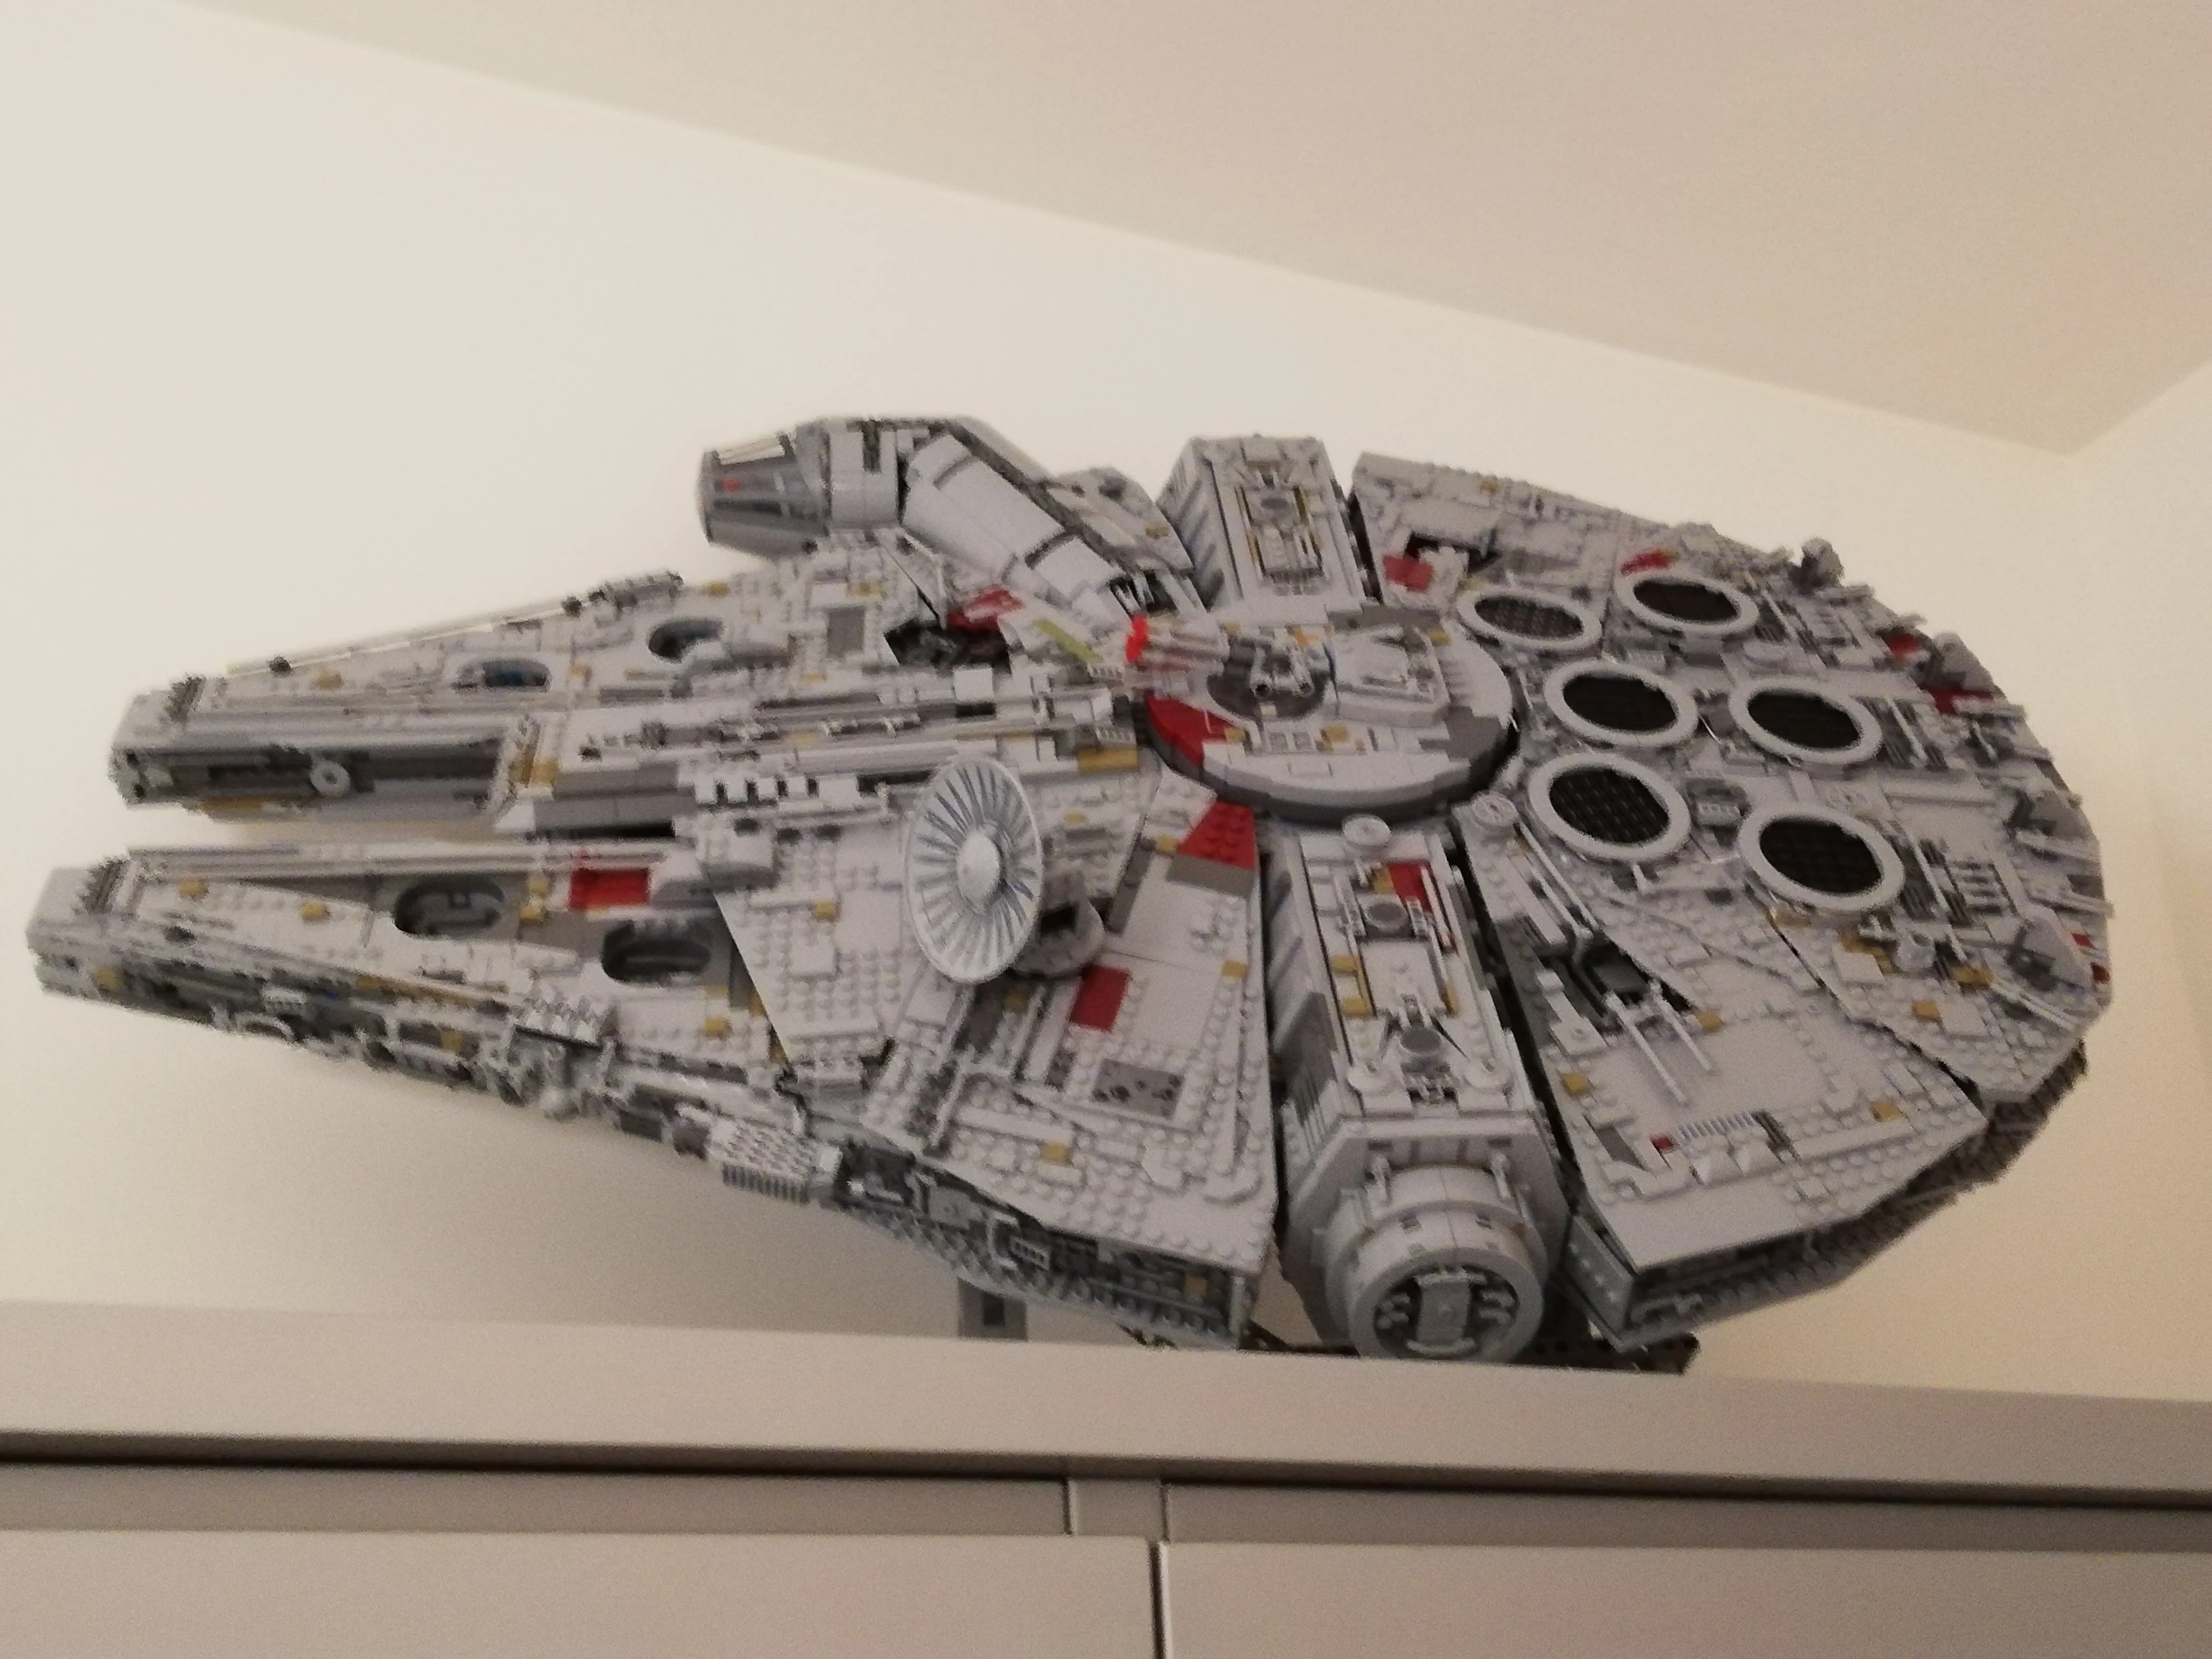 Lego Millennium Falcon 75192 - UCS - Brand New Sealed